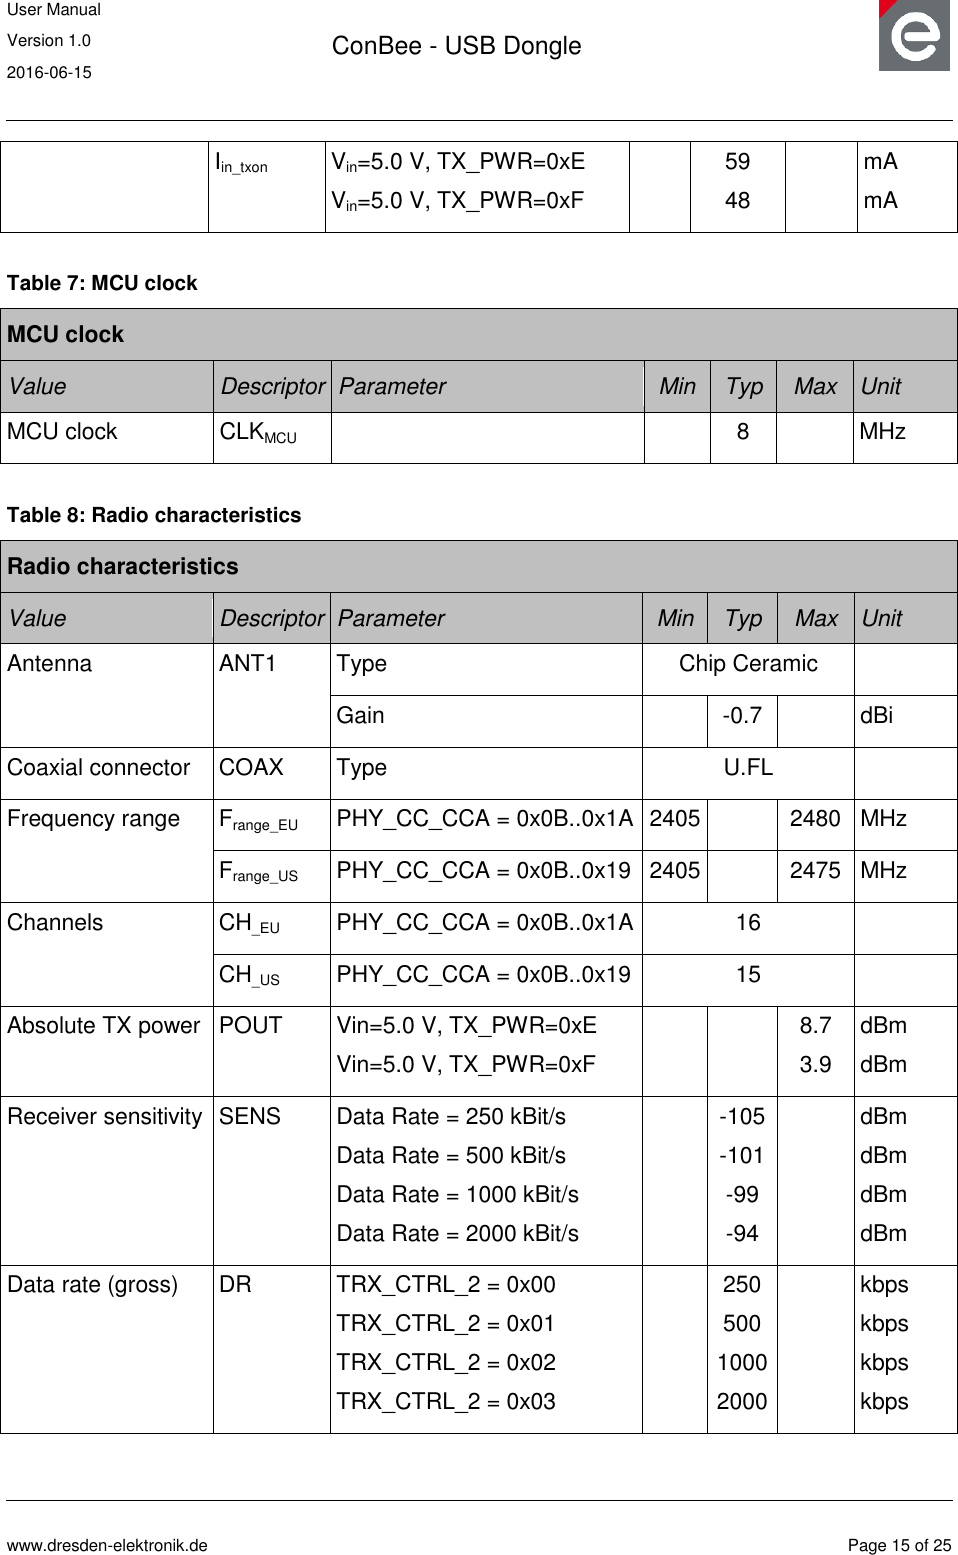 User Manual Version 1.0 2016-06-15  ConBee - USB Dongle      www.dresden-elektronik.de  Page 15 of 25  Iin_txon Vin=5.0 V, TX_PWR=0xE Vin=5.0 V, TX_PWR=0xF  59 48  mA mA  Table 7: MCU clock MCU clock Value Descriptor Parameter Min Typ Max Unit MCU clock CLKMCU   8  MHz  Table 8: Radio characteristics Radio characteristics Value Descriptor Parameter Min Typ Max Unit Antenna ANT1 Type Chip Ceramic  Gain  -0.7  dBi Coaxial connector COAX Type U.FL  Frequency range Frange_EU PHY_CC_CCA = 0x0B..0x1A 2405  2480 MHz Frange_US PHY_CC_CCA = 0x0B..0x19 2405  2475 MHz Channels CH_EU PHY_CC_CCA = 0x0B..0x1A 16  CH_US PHY_CC_CCA = 0x0B..0x19 15  Absolute TX power POUT Vin=5.0 V, TX_PWR=0xE Vin=5.0 V, TX_PWR=0xF   8.7 3.9 dBm dBm Receiver sensitivity SENS Data Rate = 250 kBit/s Data Rate = 500 kBit/s Data Rate = 1000 kBit/s Data Rate = 2000 kBit/s  -105 -101 -99 -94  dBm dBm dBm dBm Data rate (gross) DR TRX_CTRL_2 = 0x00 TRX_CTRL_2 = 0x01 TRX_CTRL_2 = 0x02 TRX_CTRL_2 = 0x03  250 500 1000 2000  kbps kbps kbps kbps  